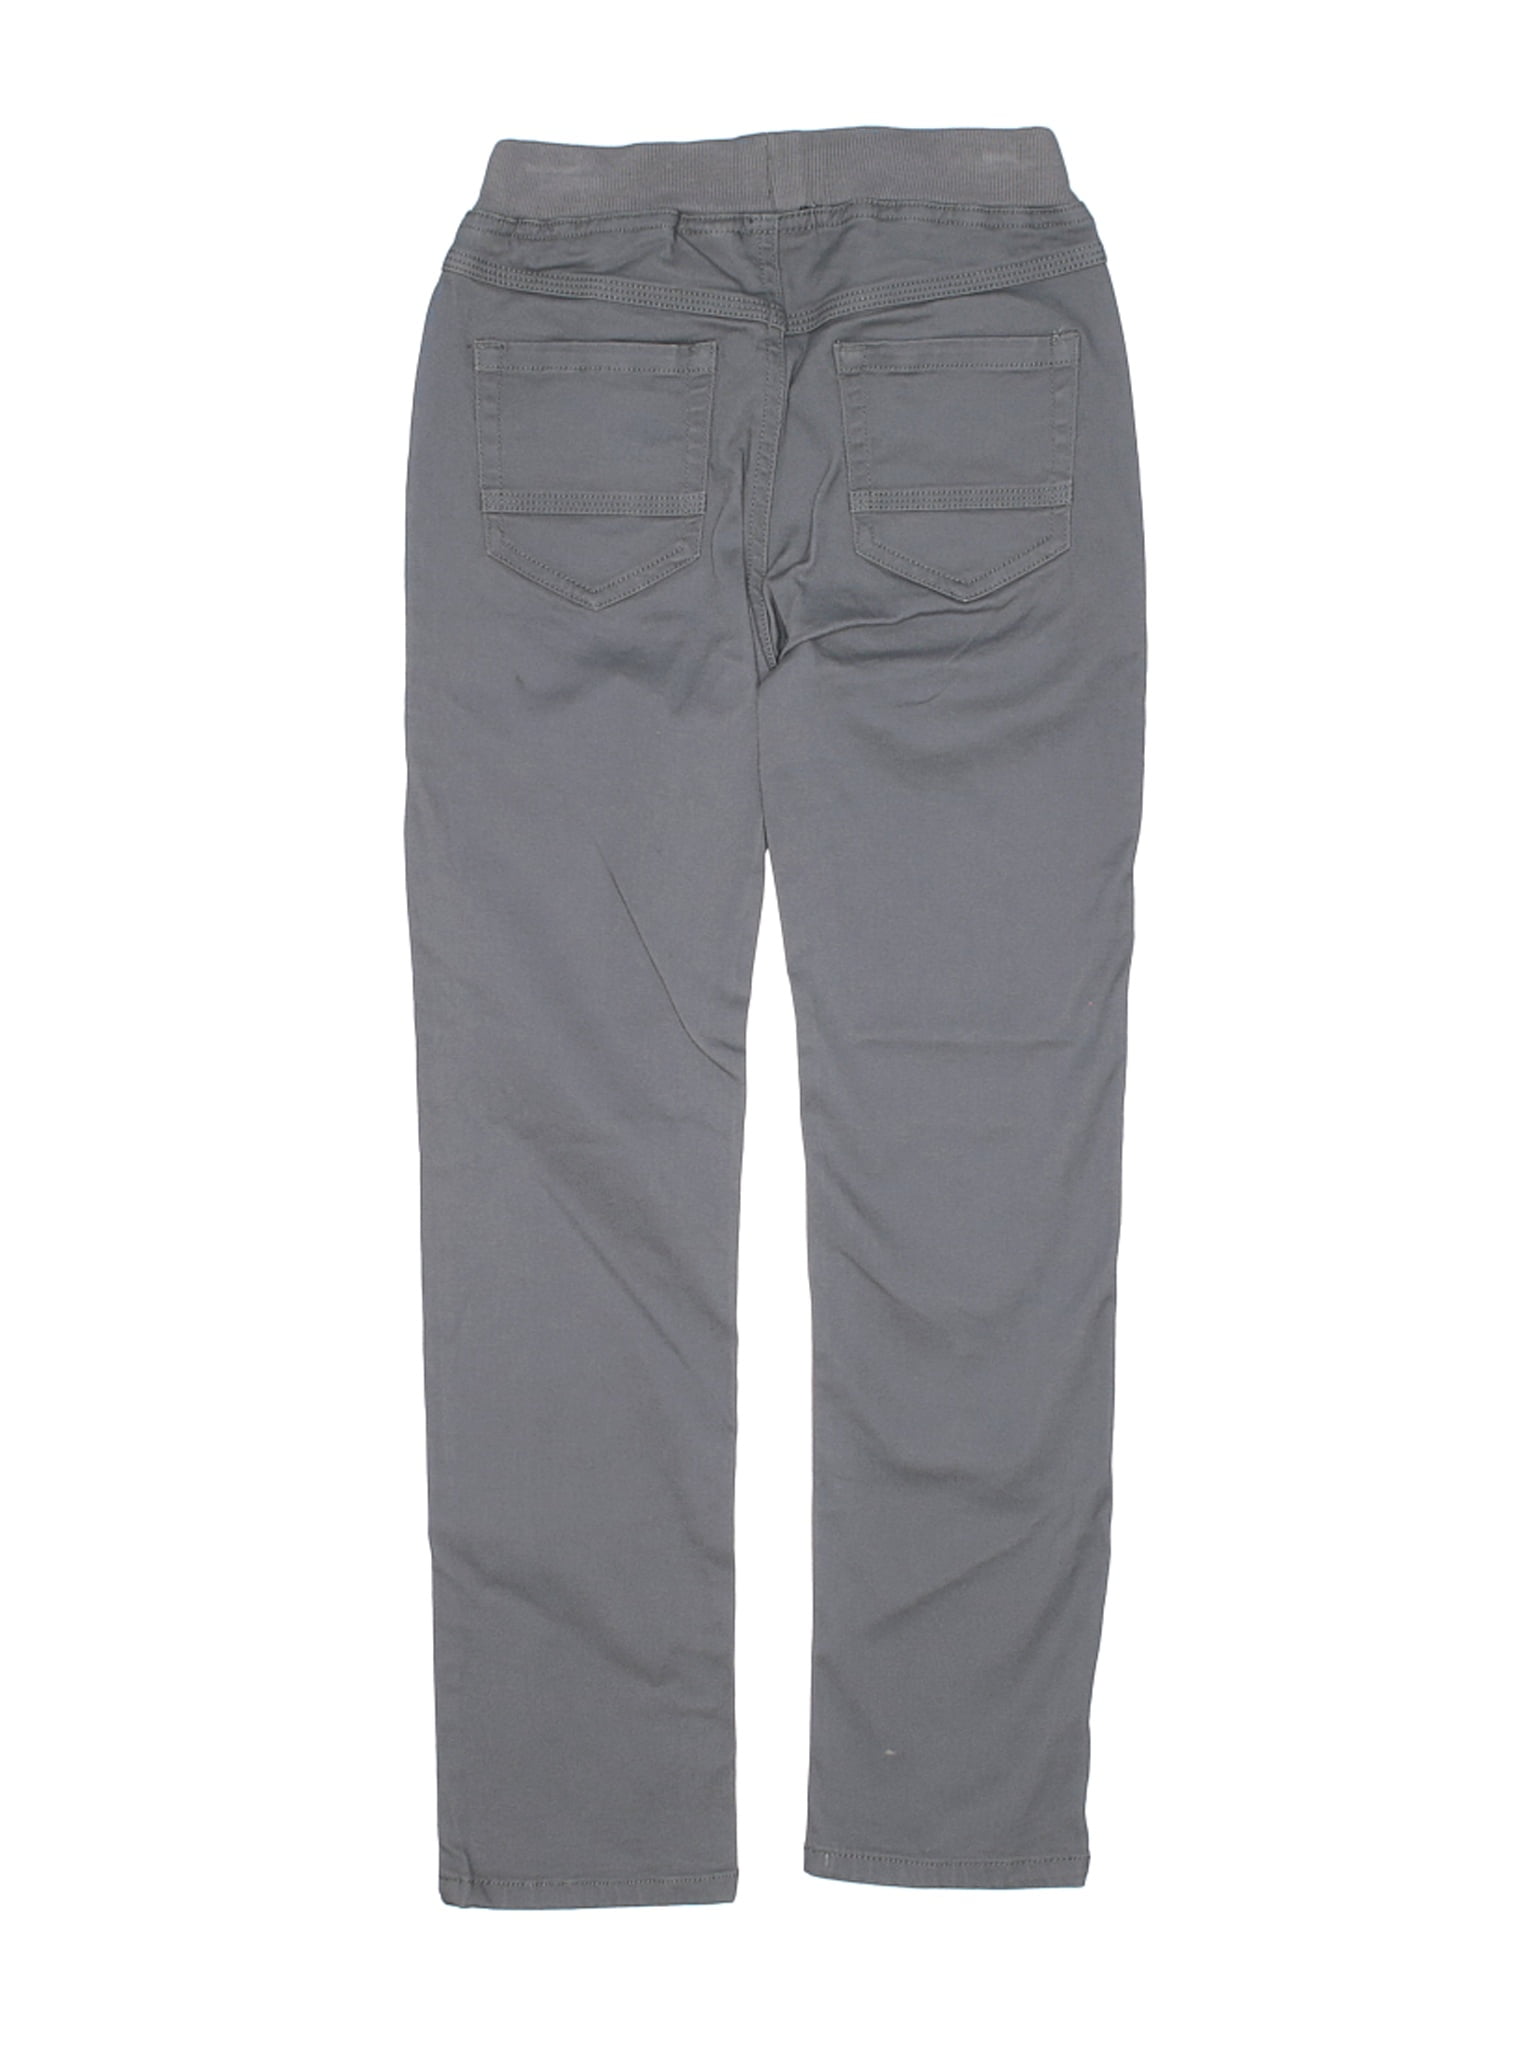 Hanna Andersson Boys Carpenter Jeans Pants Size 130